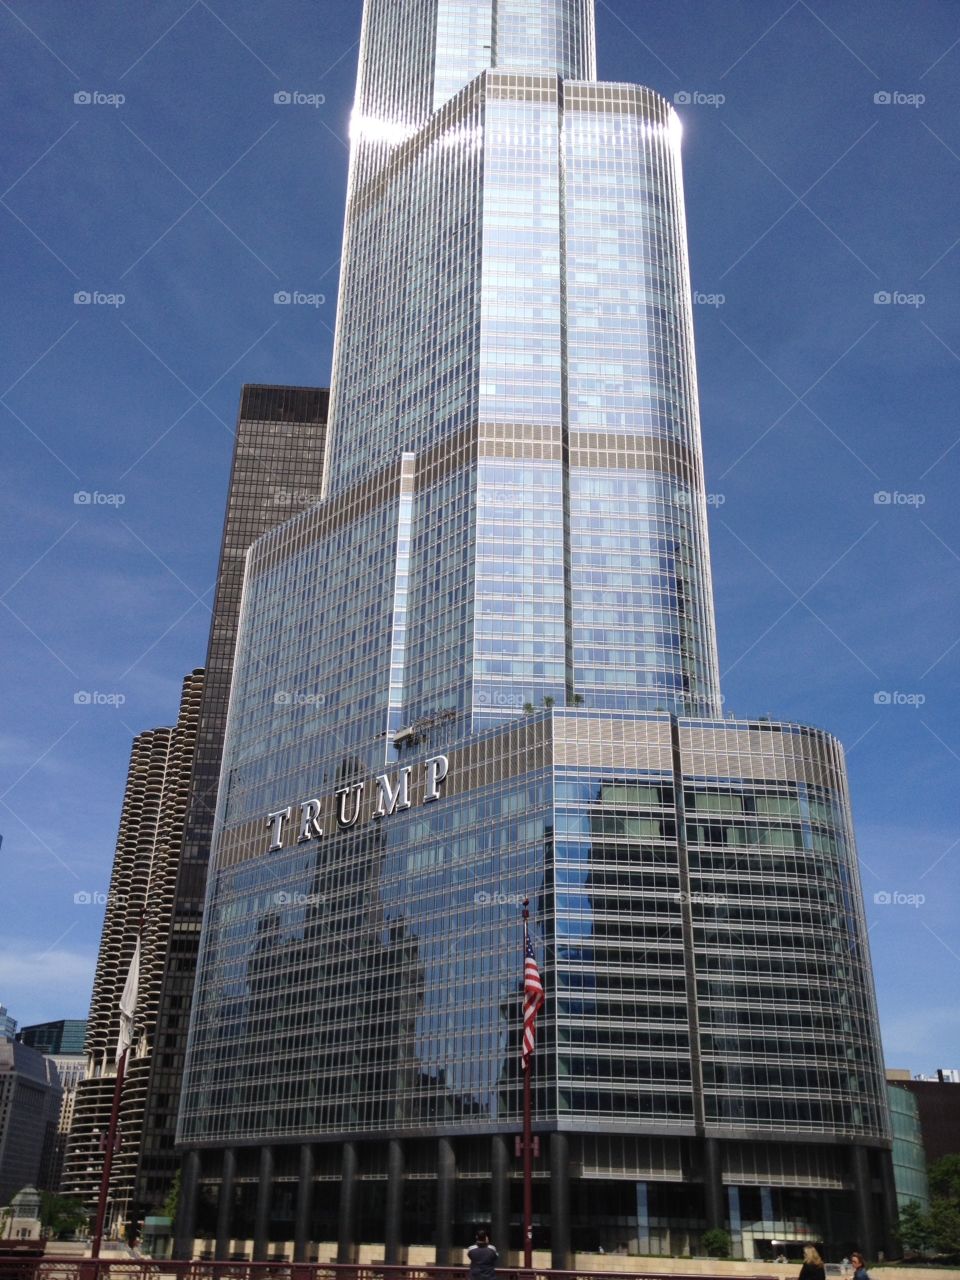 Trump Tower!